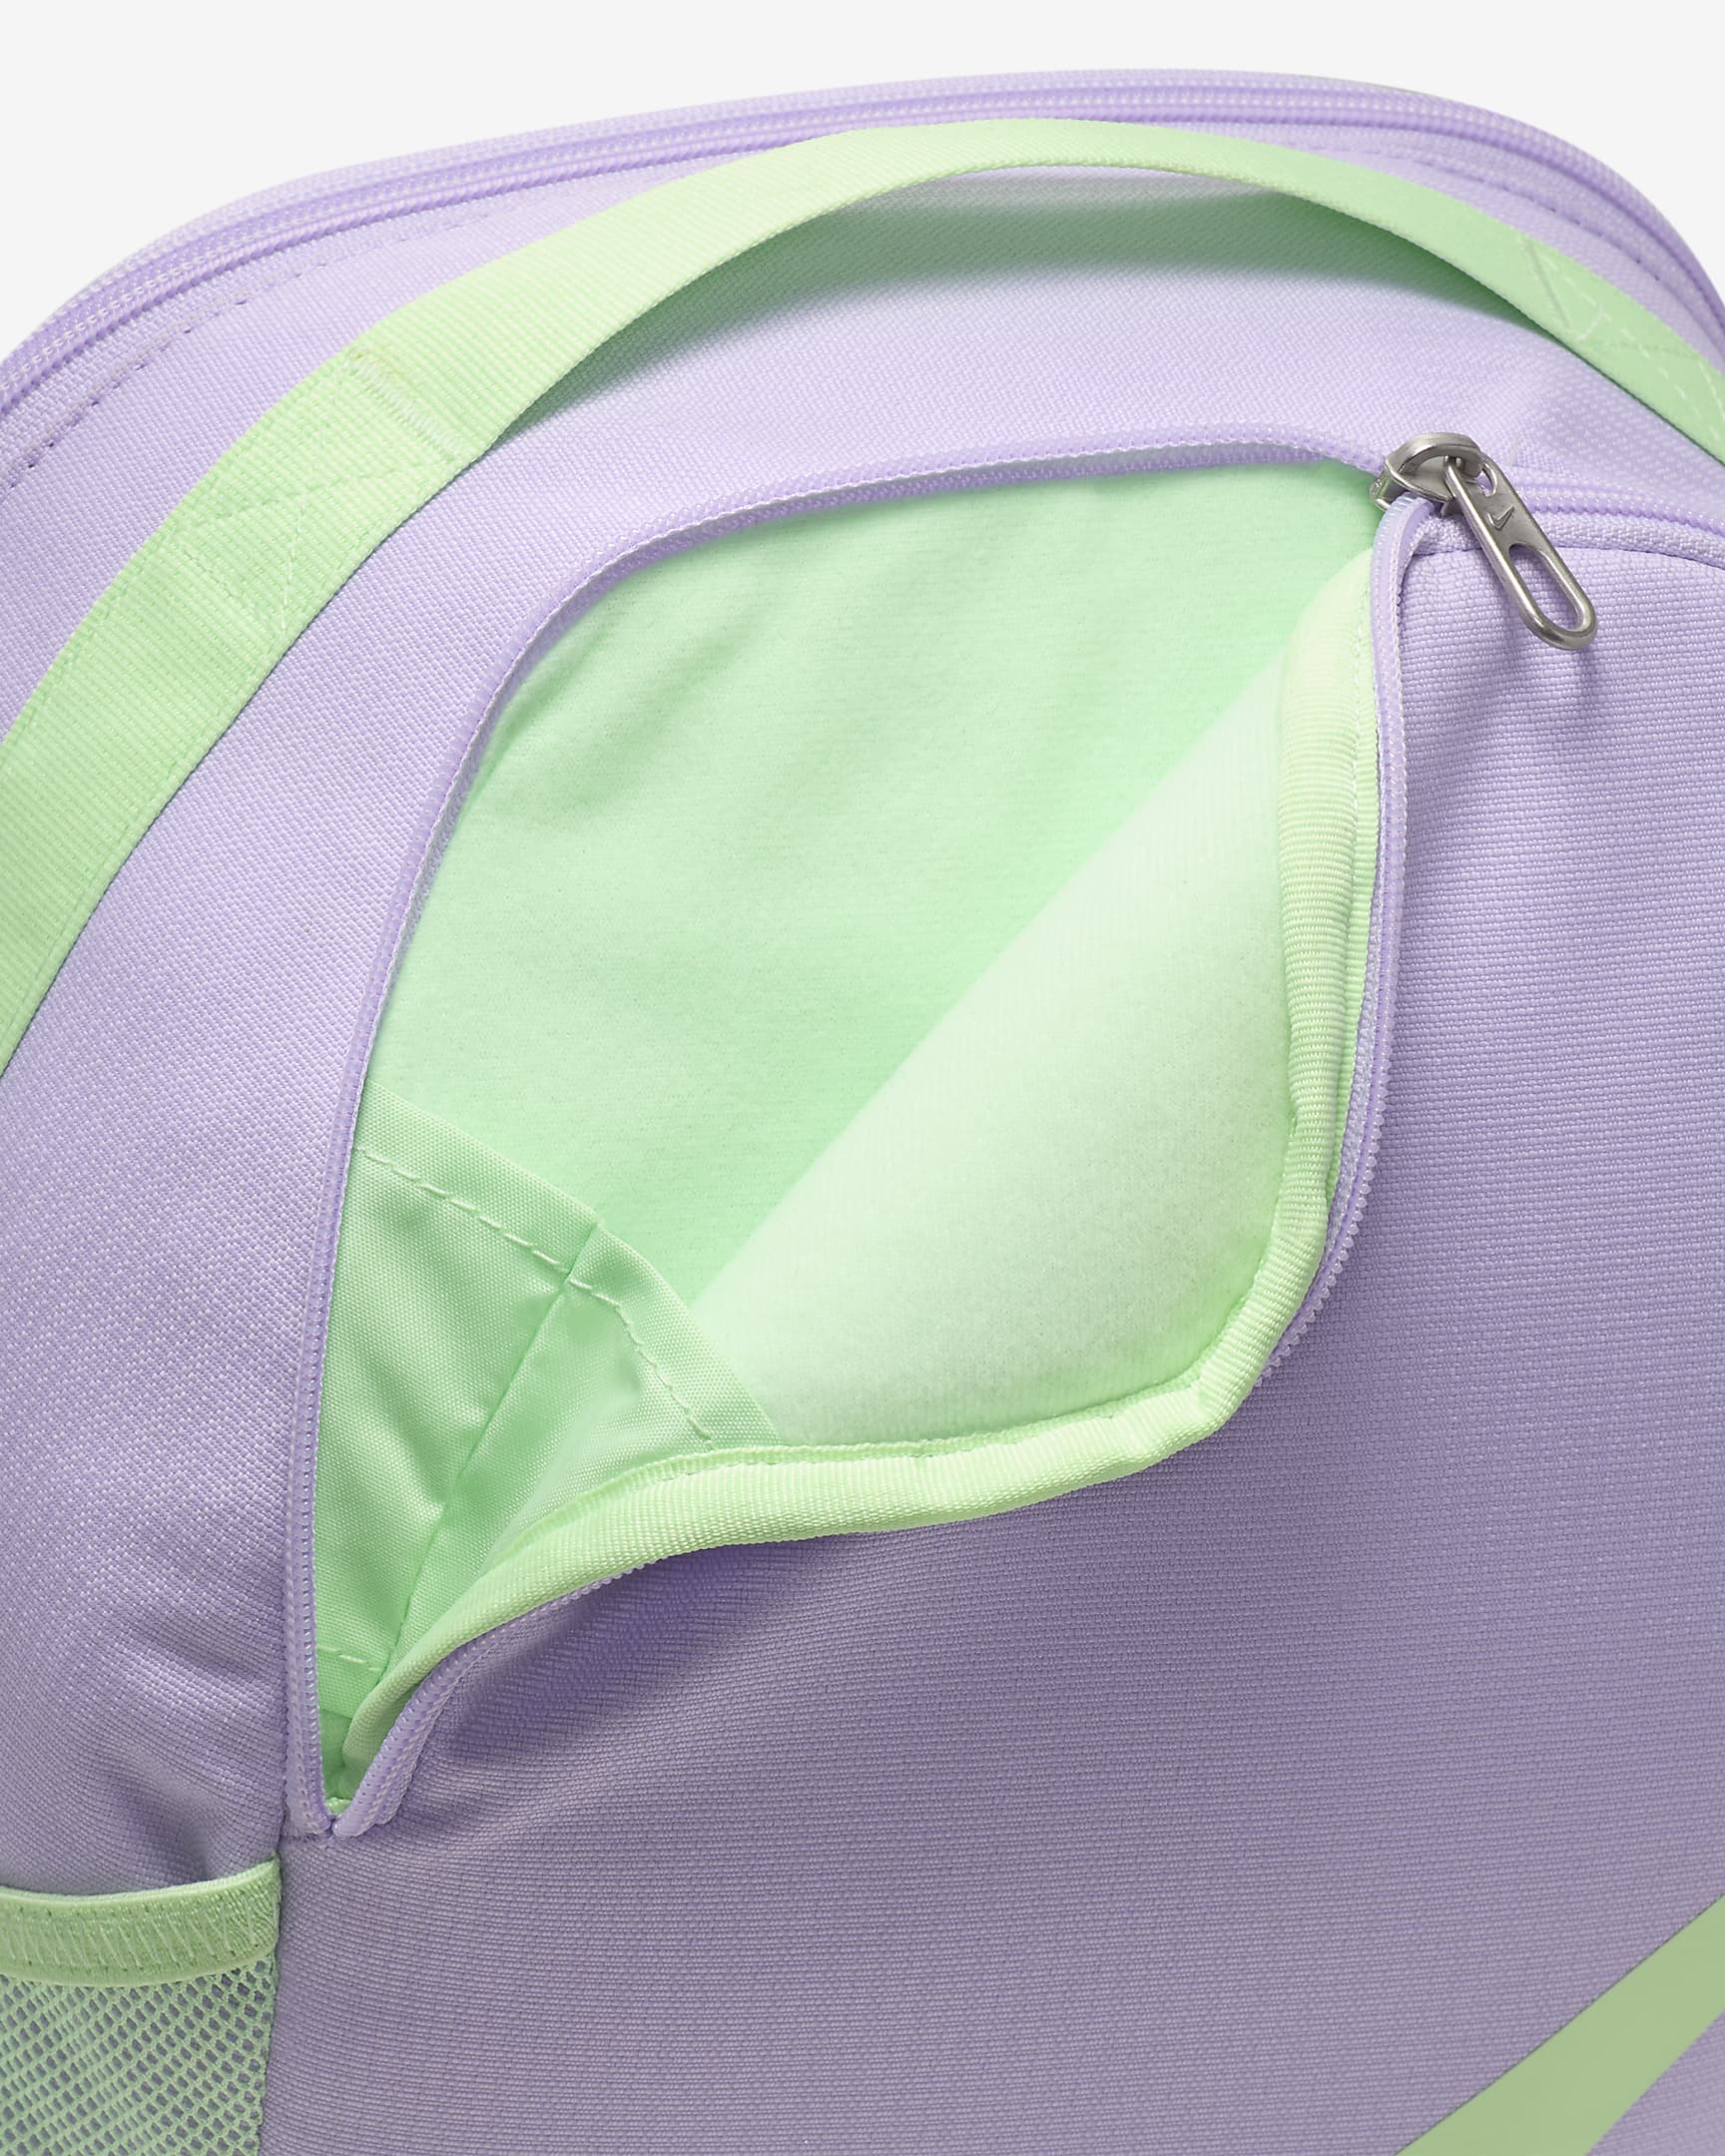 Nike Brasilia Kids' Backpack (18L) - Lilac Bloom/Vapour Green/Vapour Green